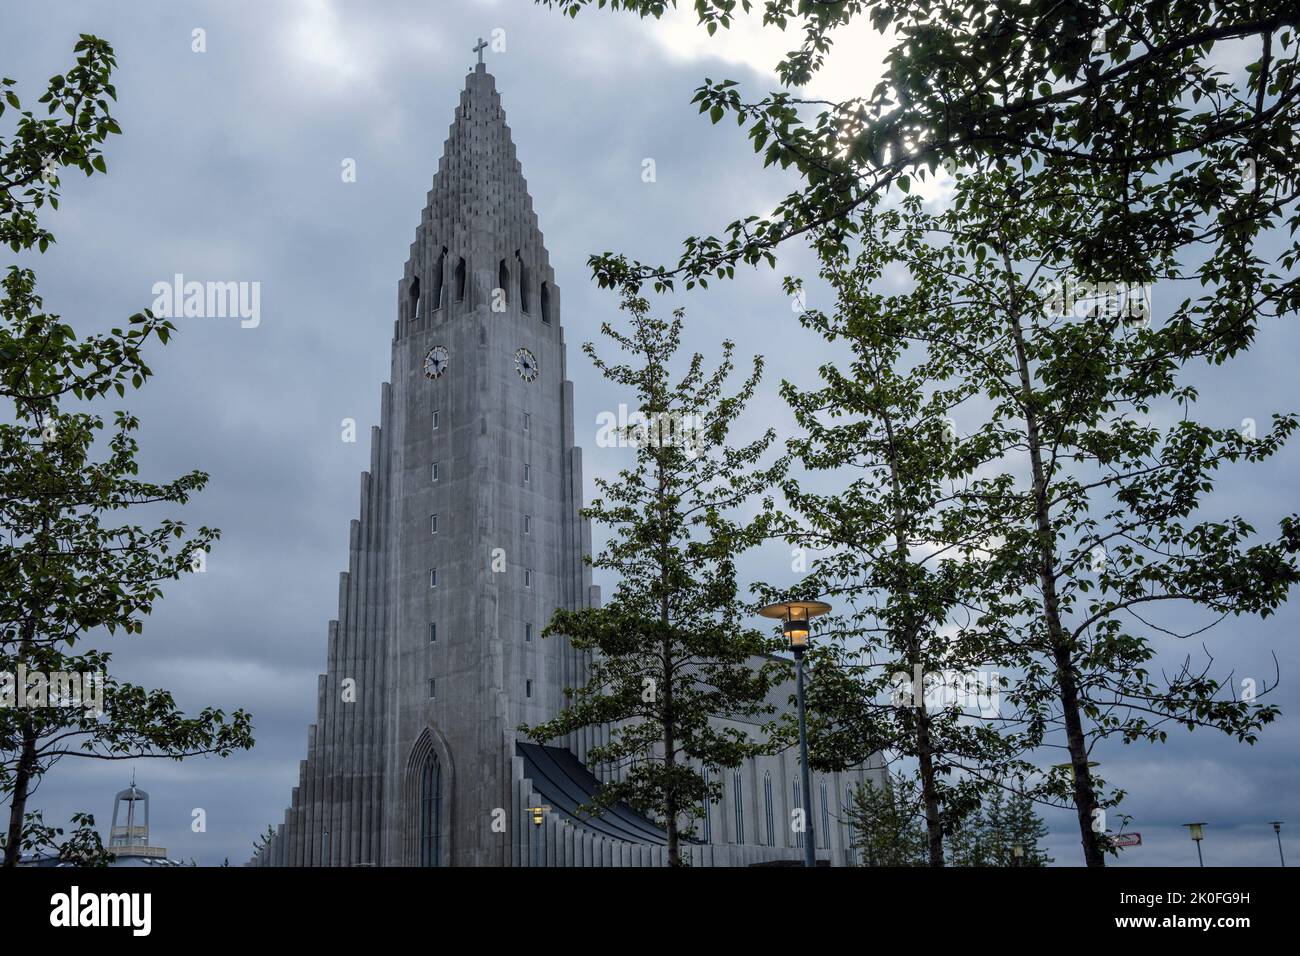 Hallgrimskirkja - the cathedral in Reykjavik, Iceland Stock Photo